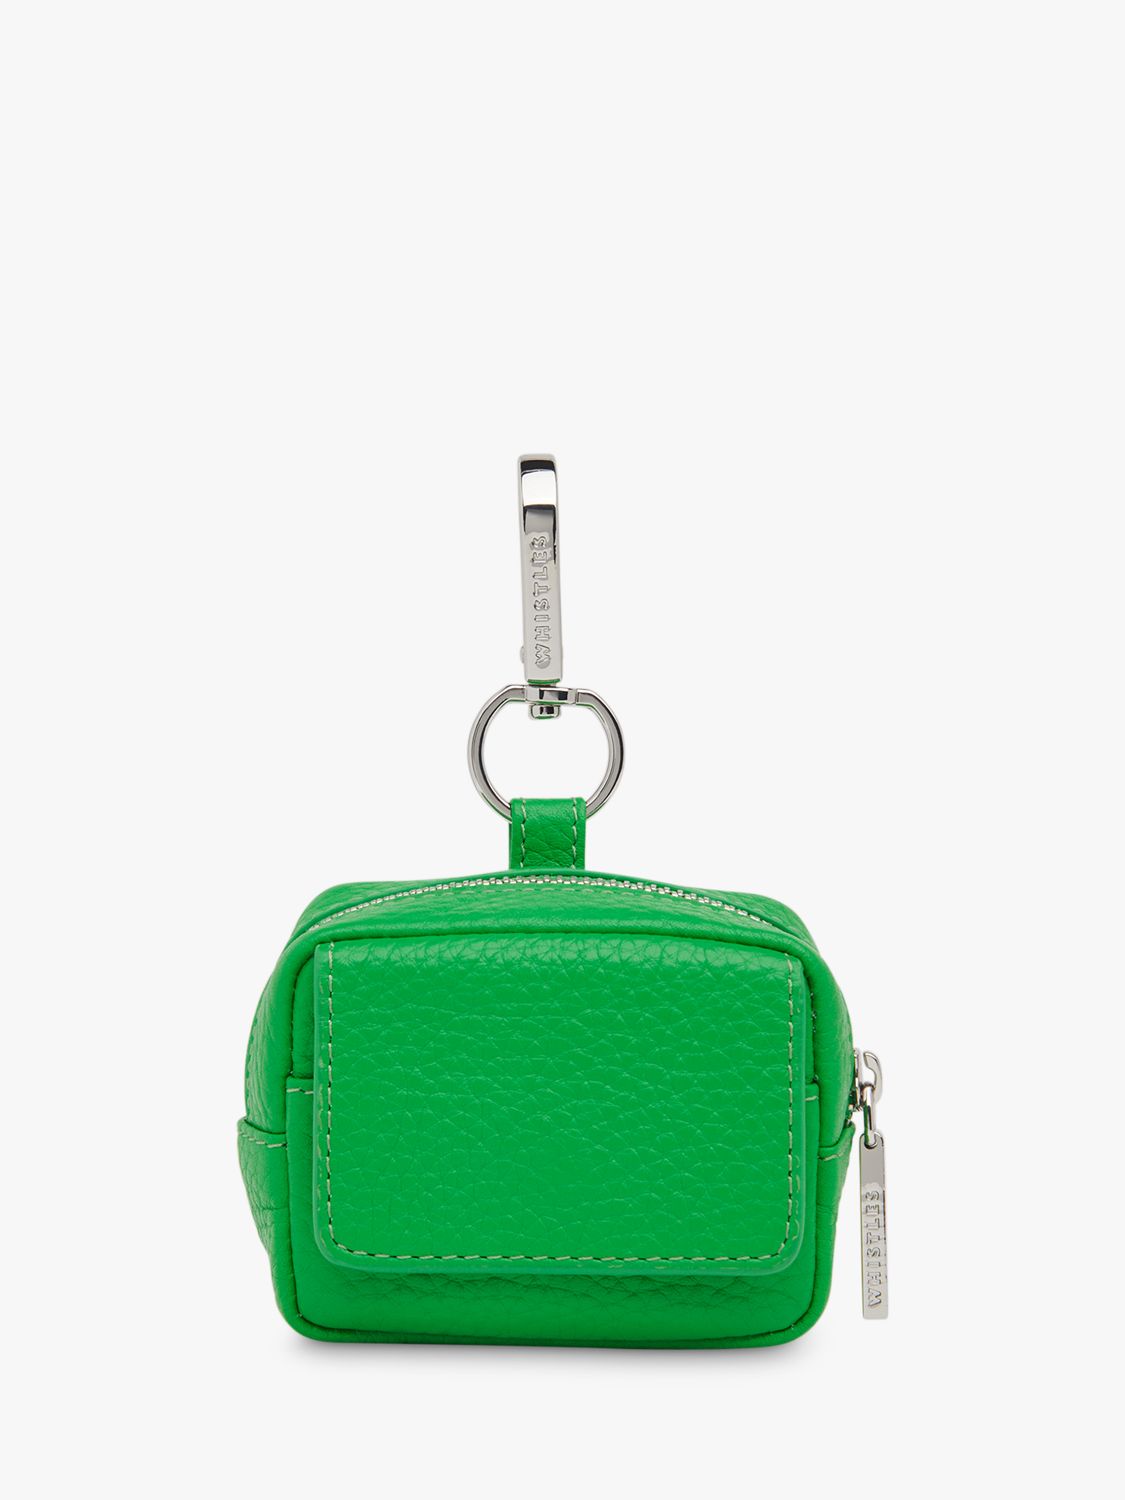 Whistles Bibi Mini Keyring Bag, Green/Multi, One Size